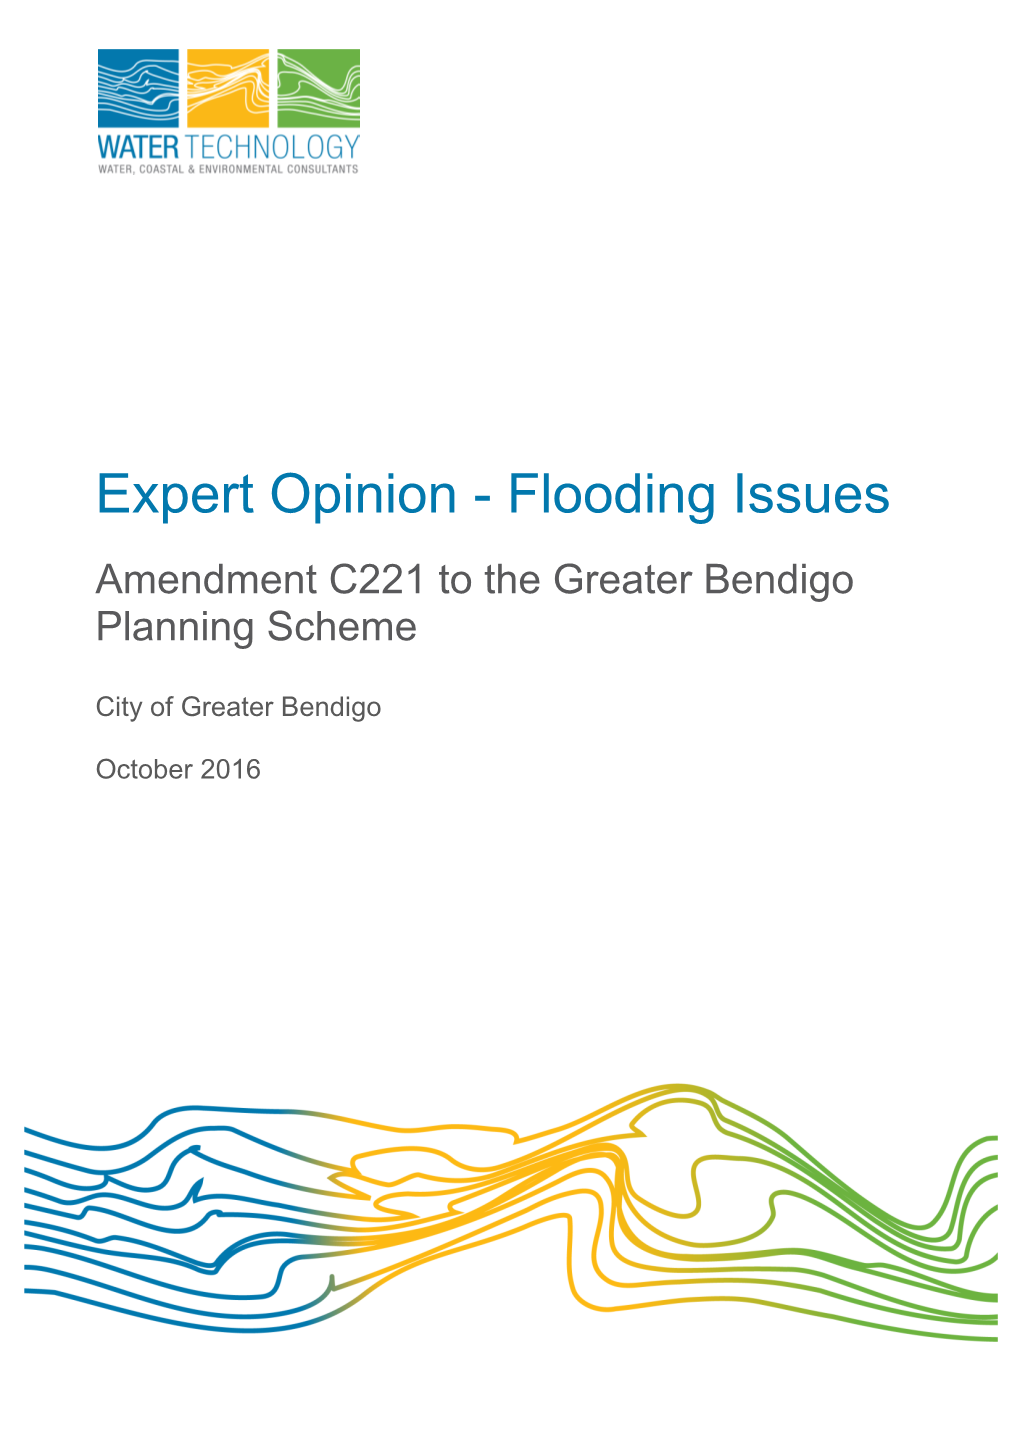 Expert Opinion - Flooding Issues Amendment C221 to the Greater Bendigo Planning Scheme